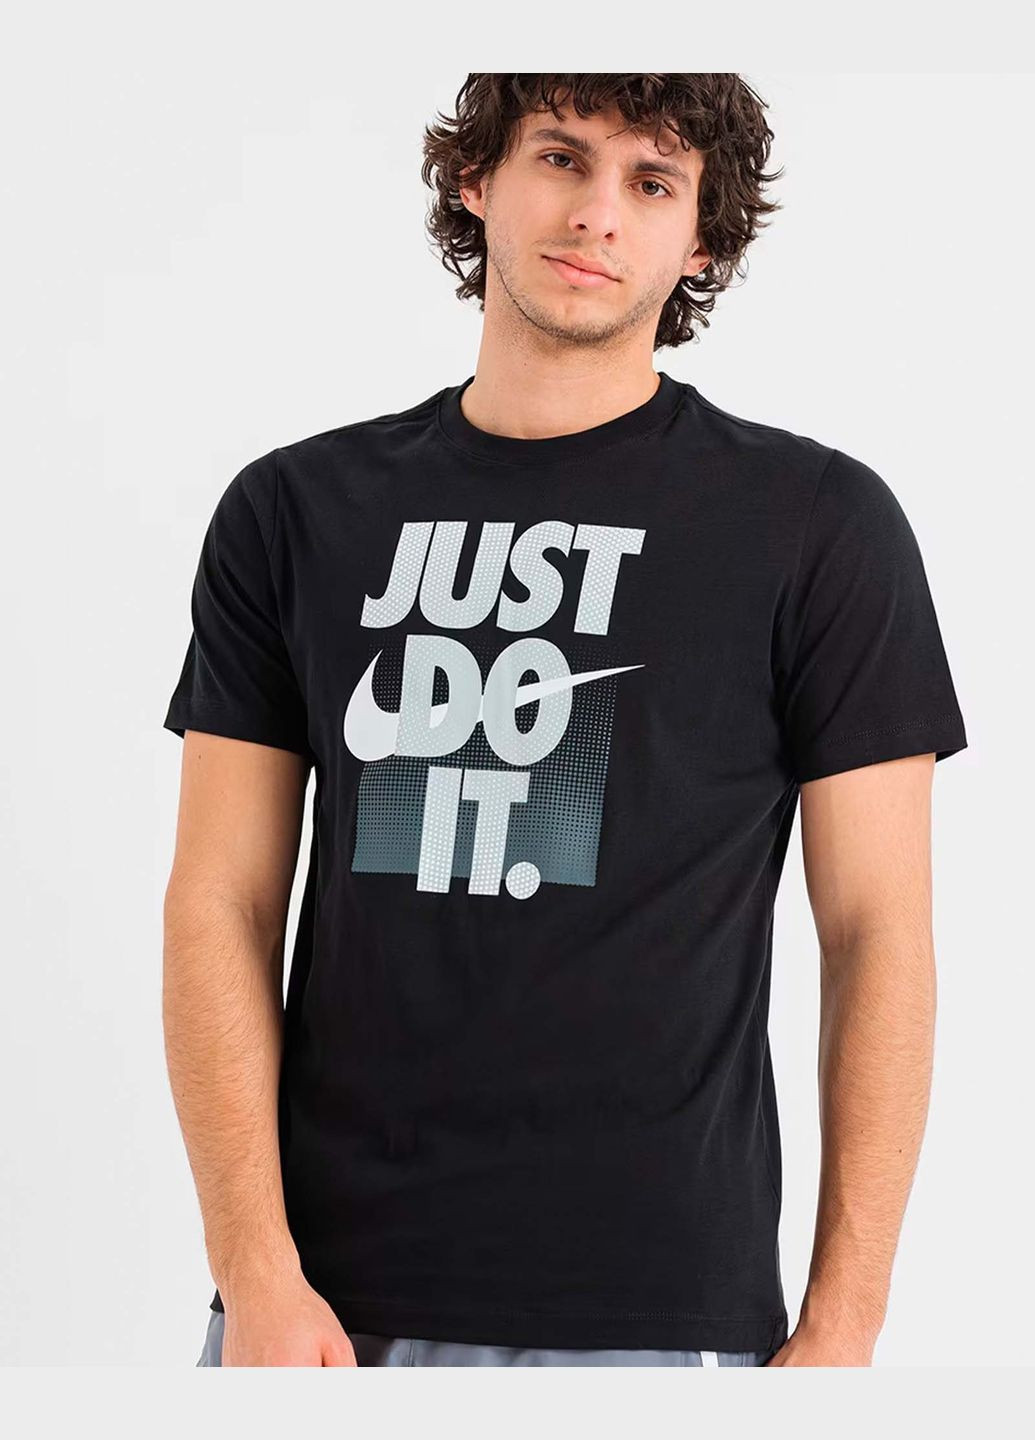 Черная футболка мужская tee 12mo jdi dz2993-010 черная Nike